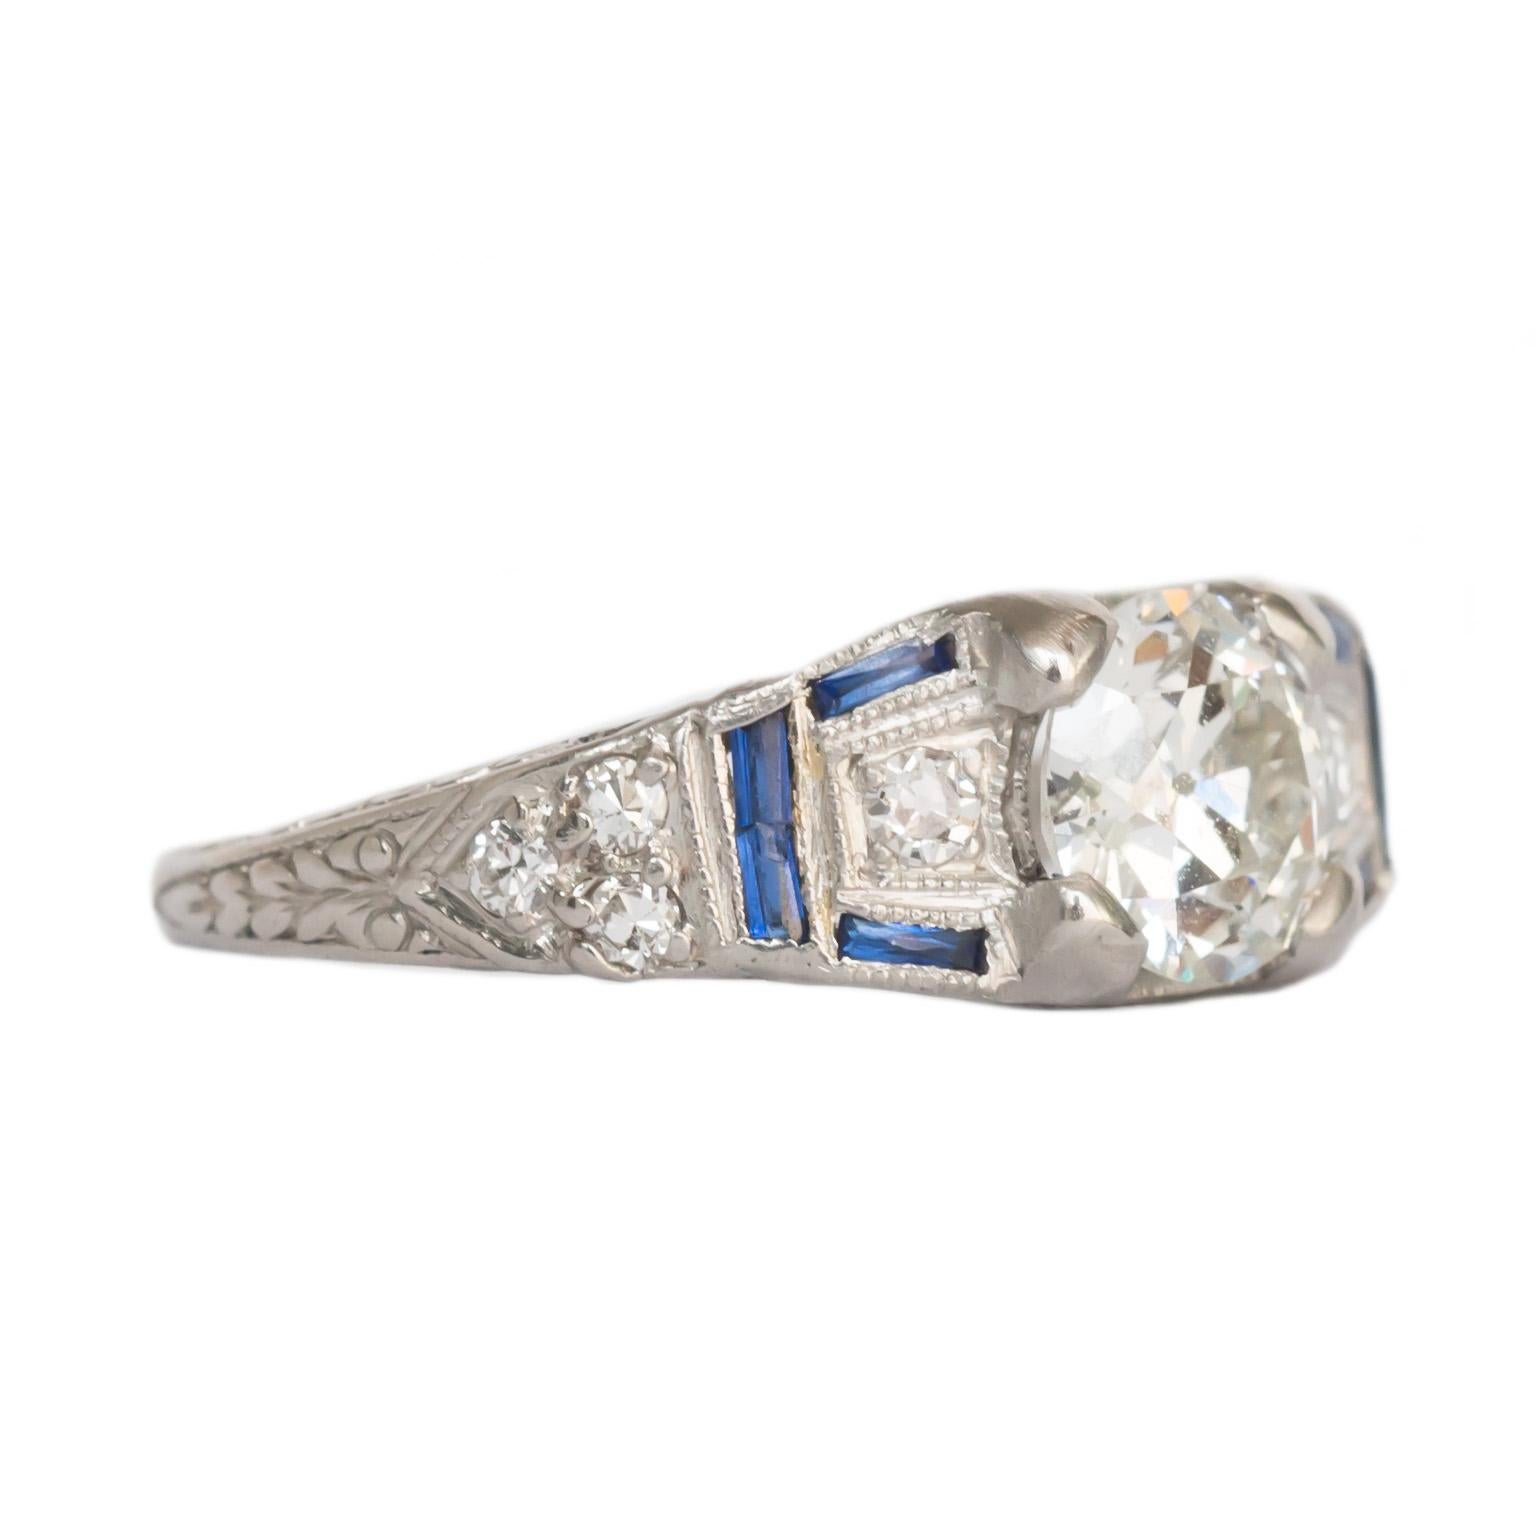 69 carat diamond ring